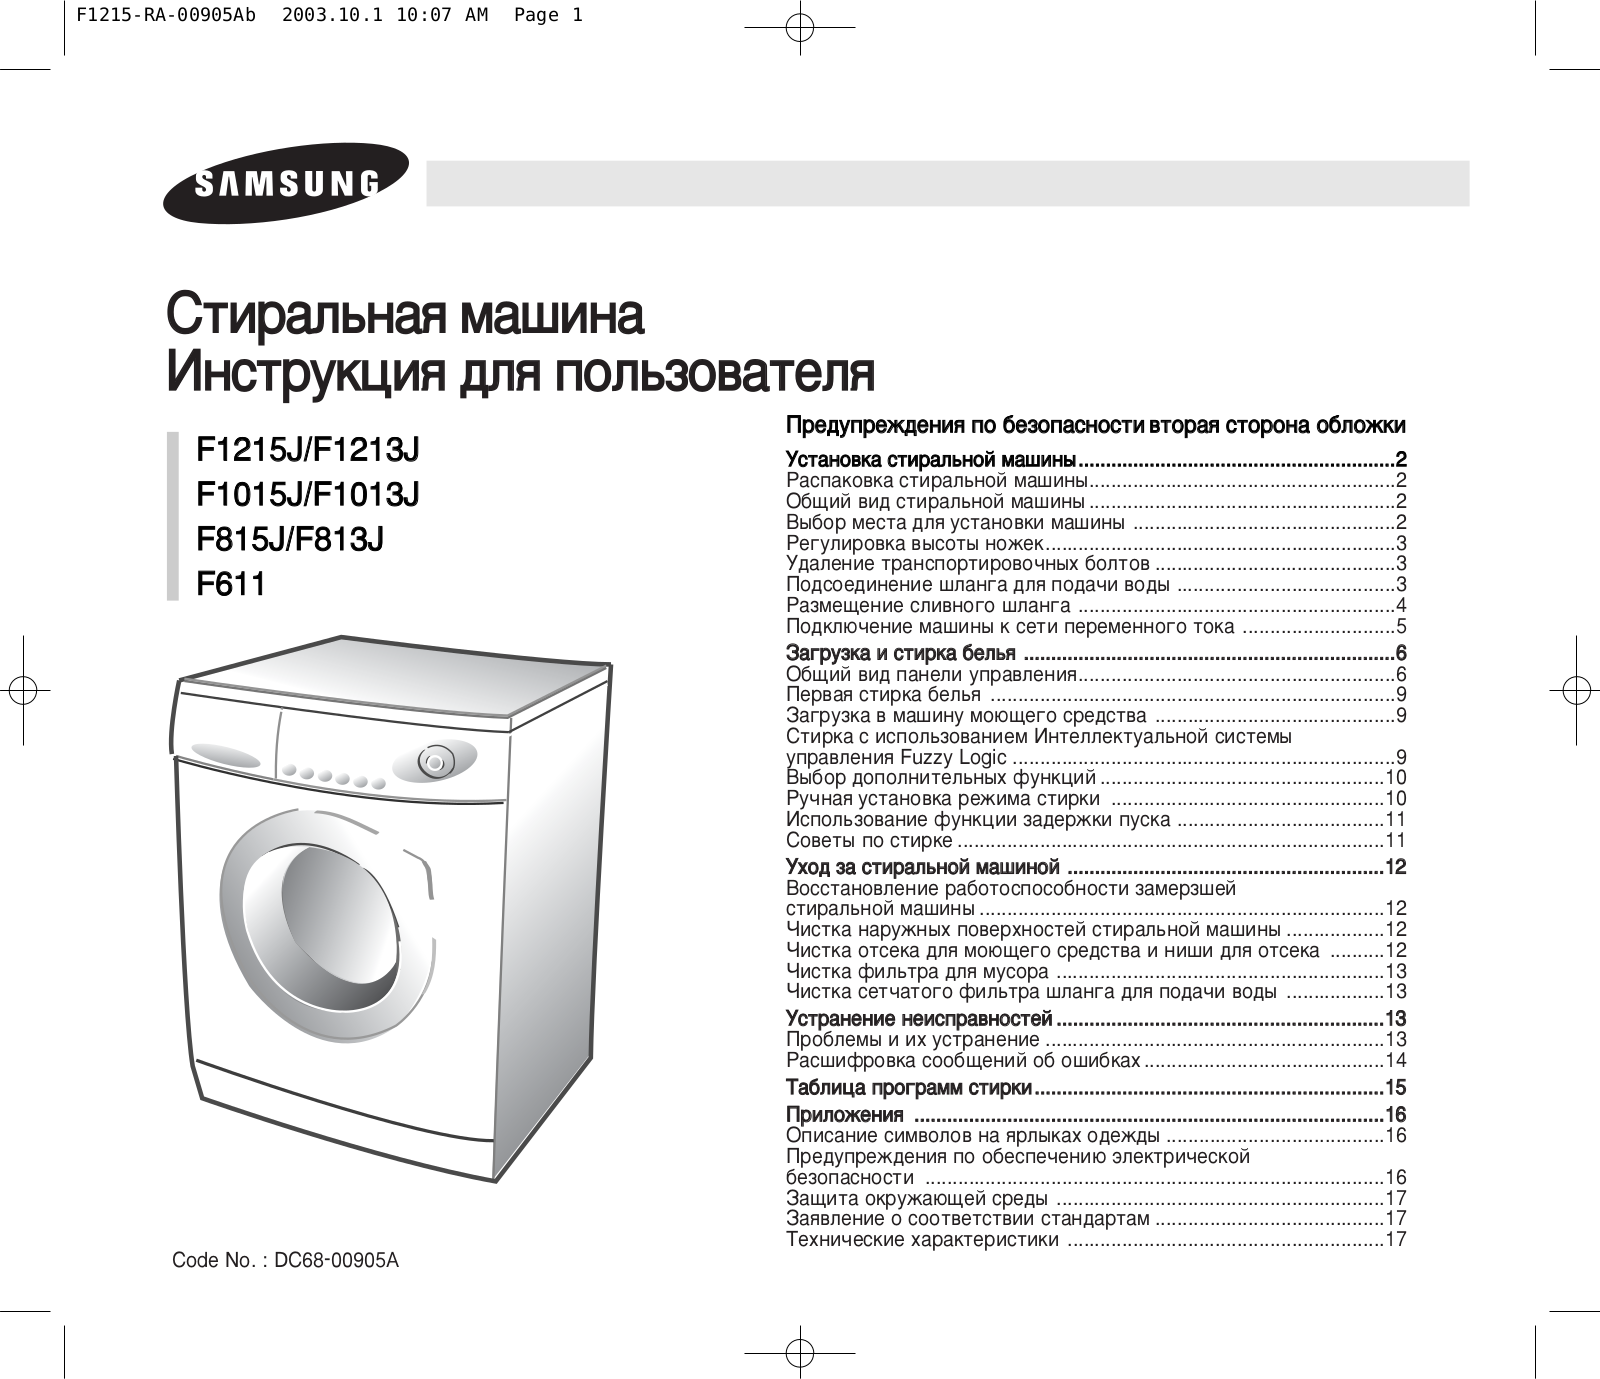 Samsung F611 User Manual